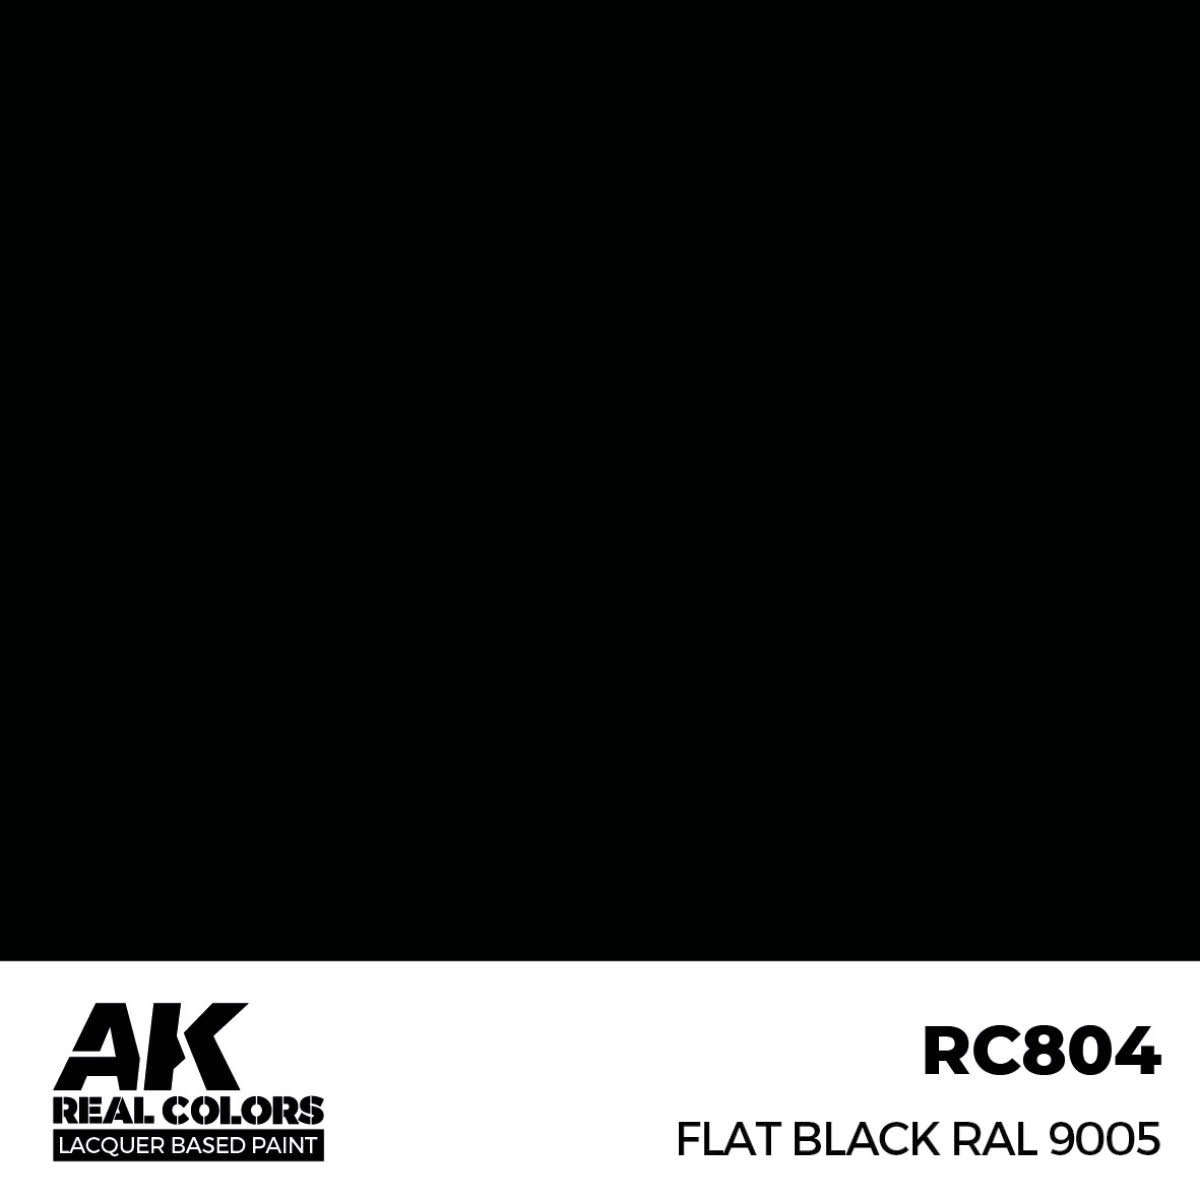 Flat Black RAL 9005